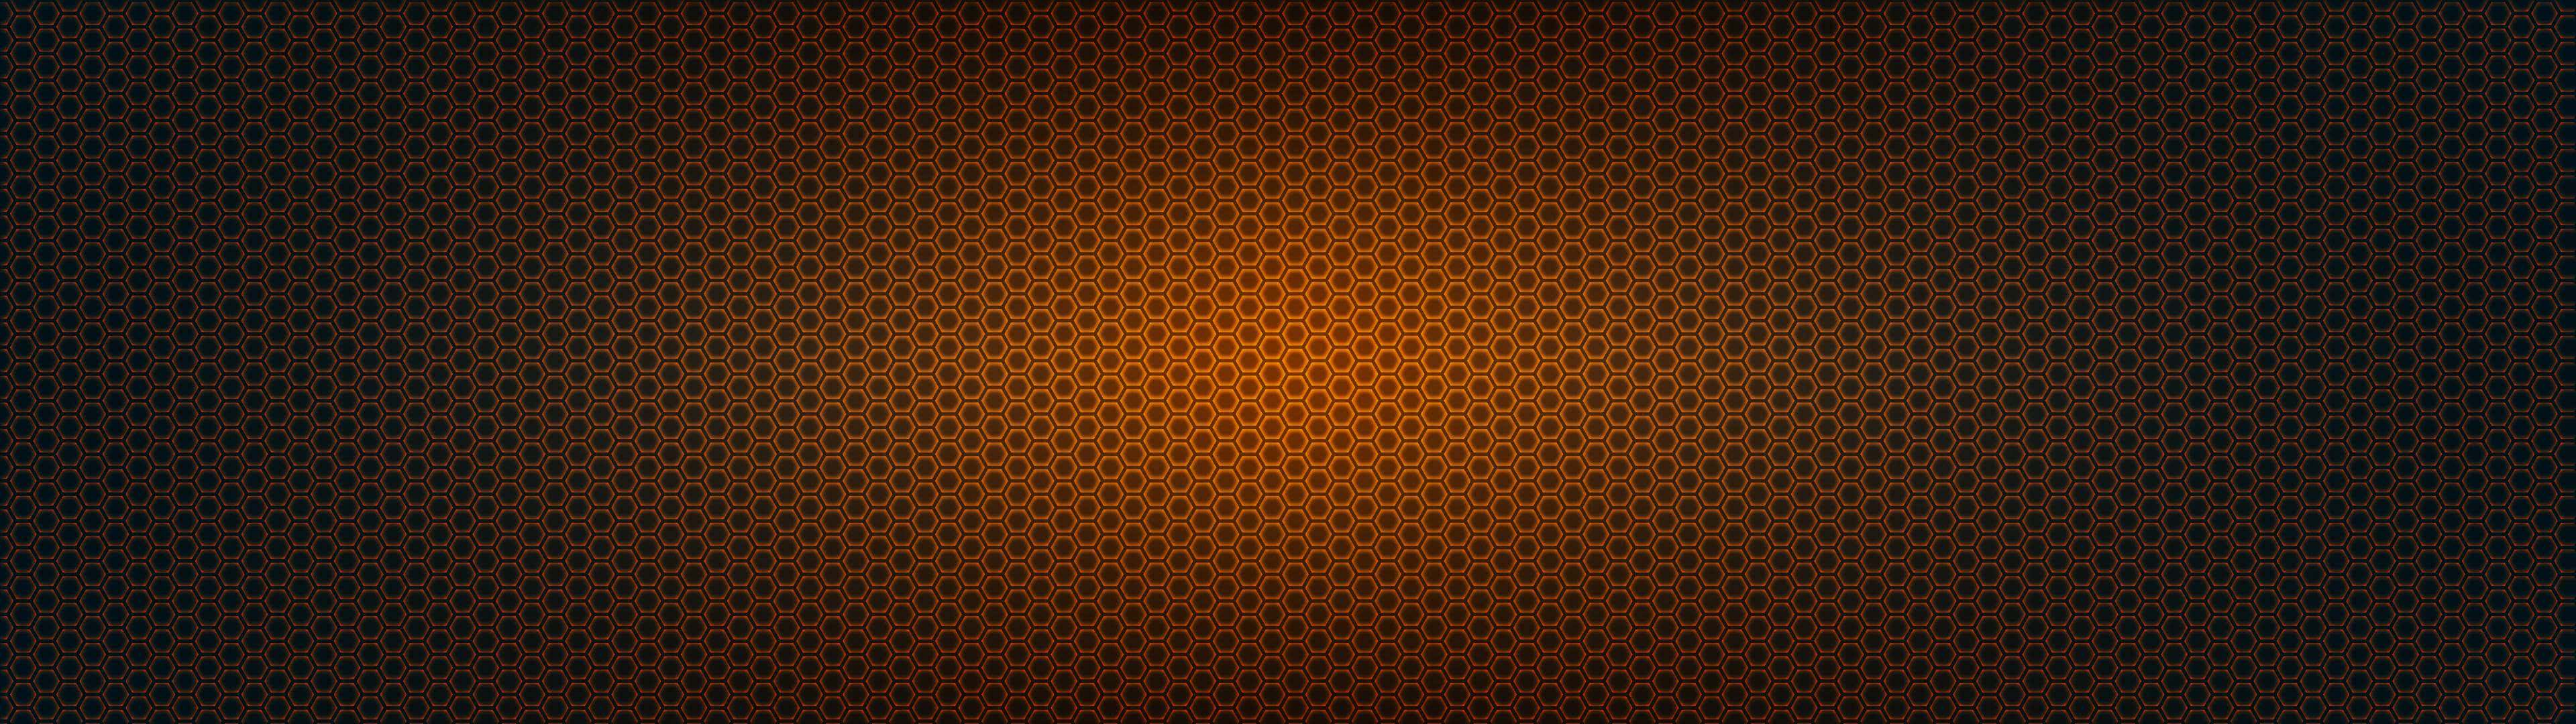 Octagons Orange Dual Monitor Wallpaper - Colorfulness - HD Wallpaper 